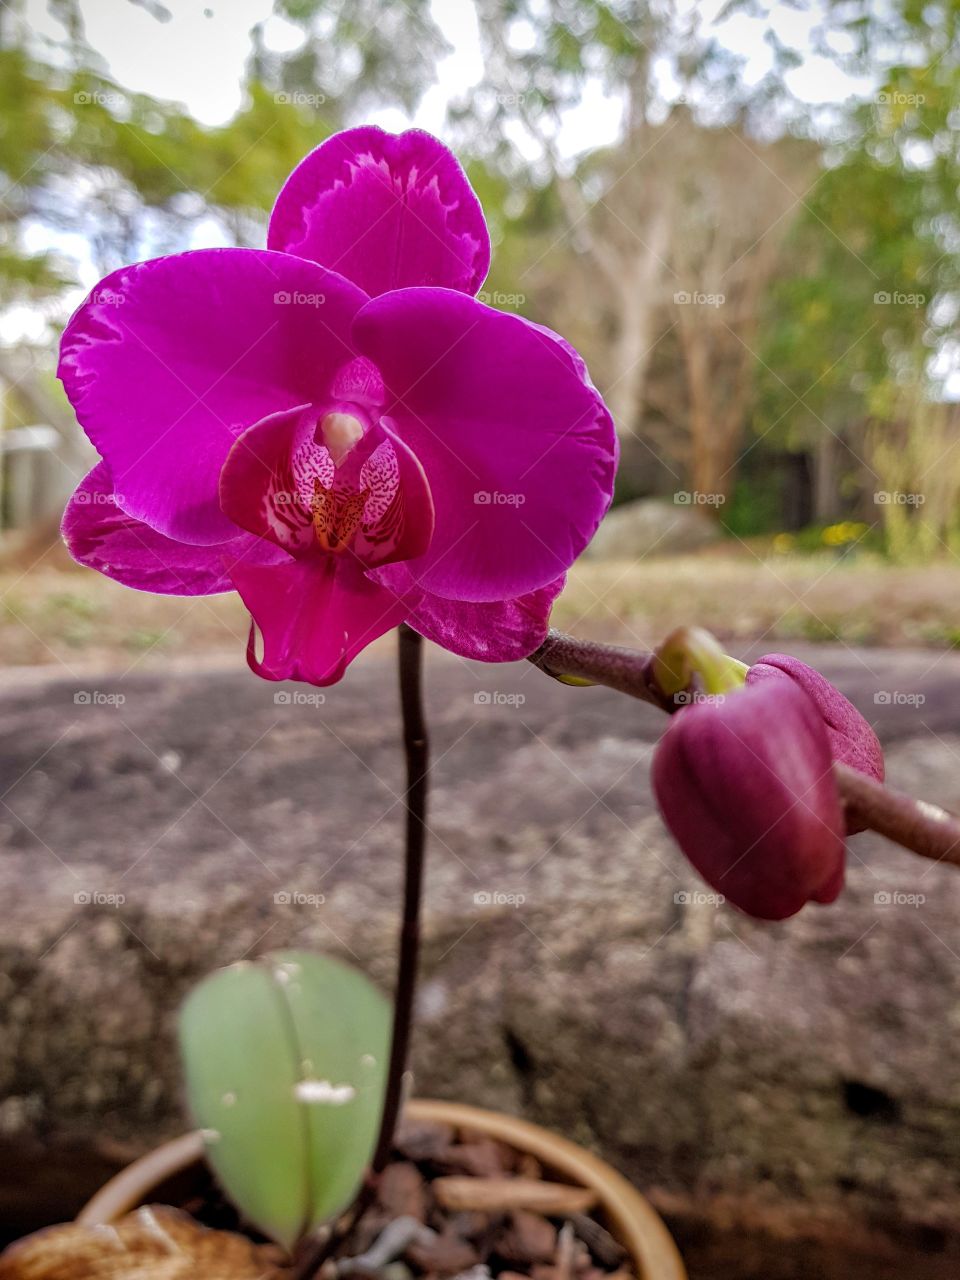 Dad's orchid